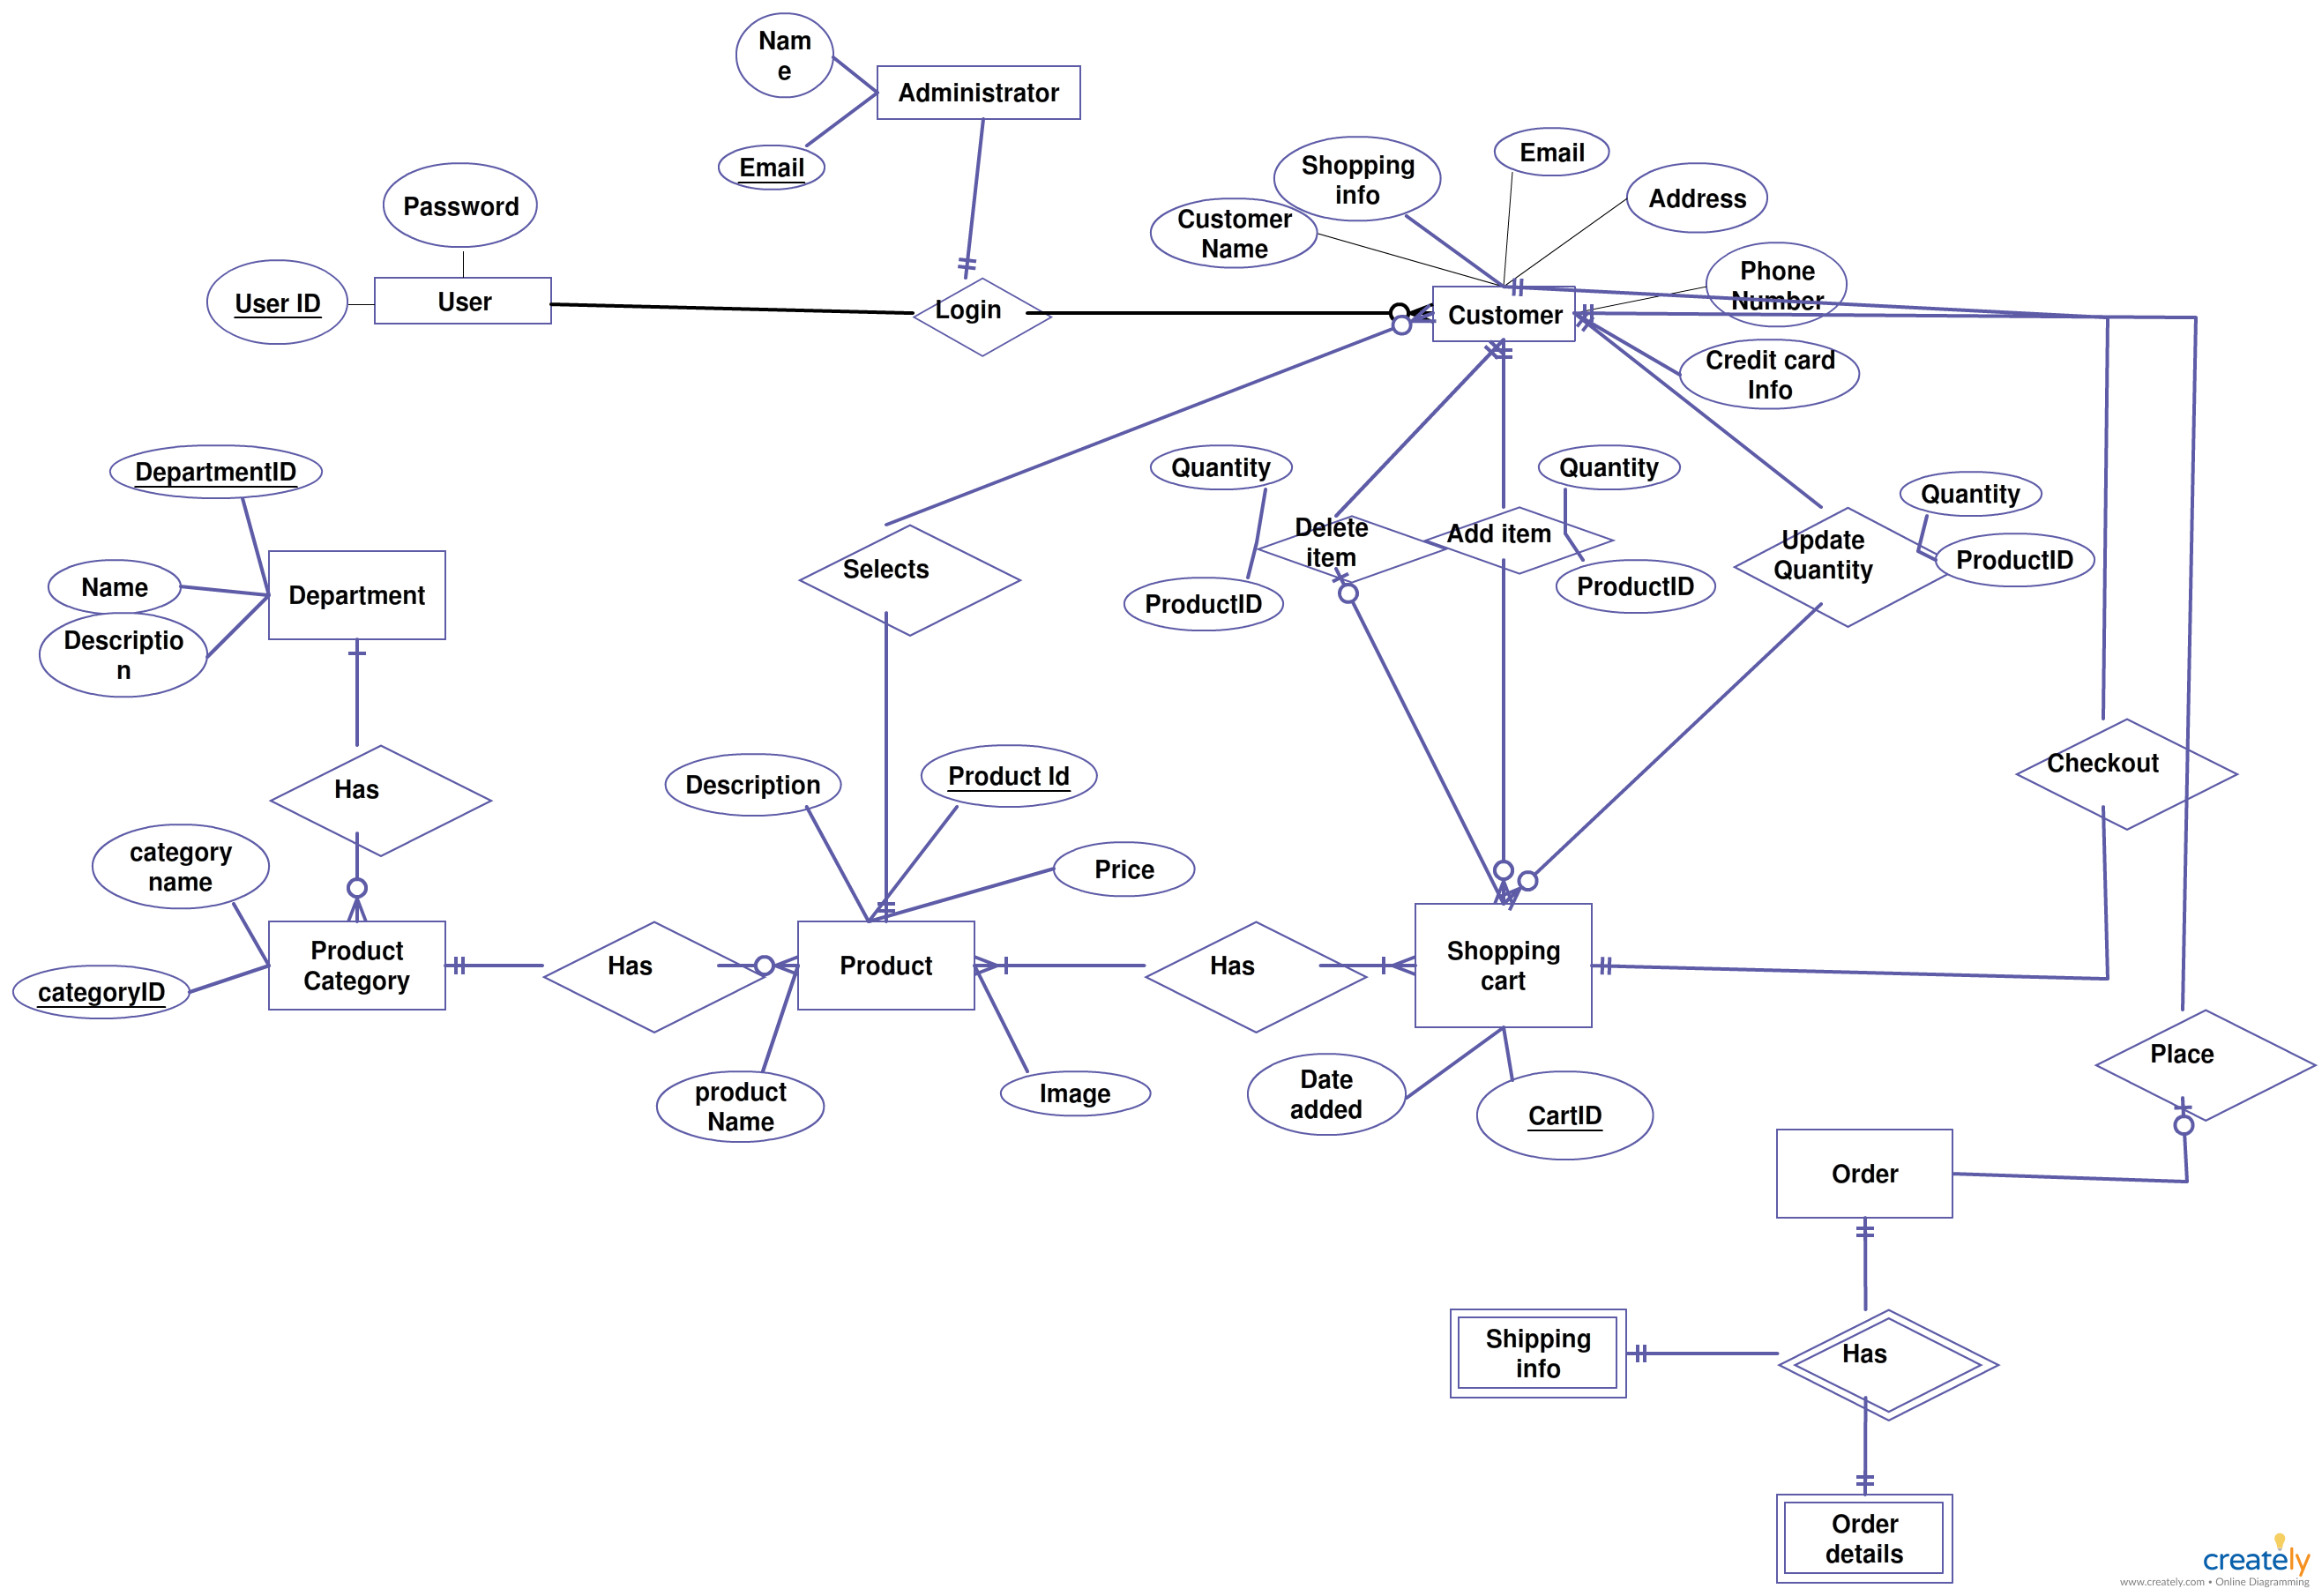 Wr_9277] Shopping Cart Entity Relationship Diagram Creately